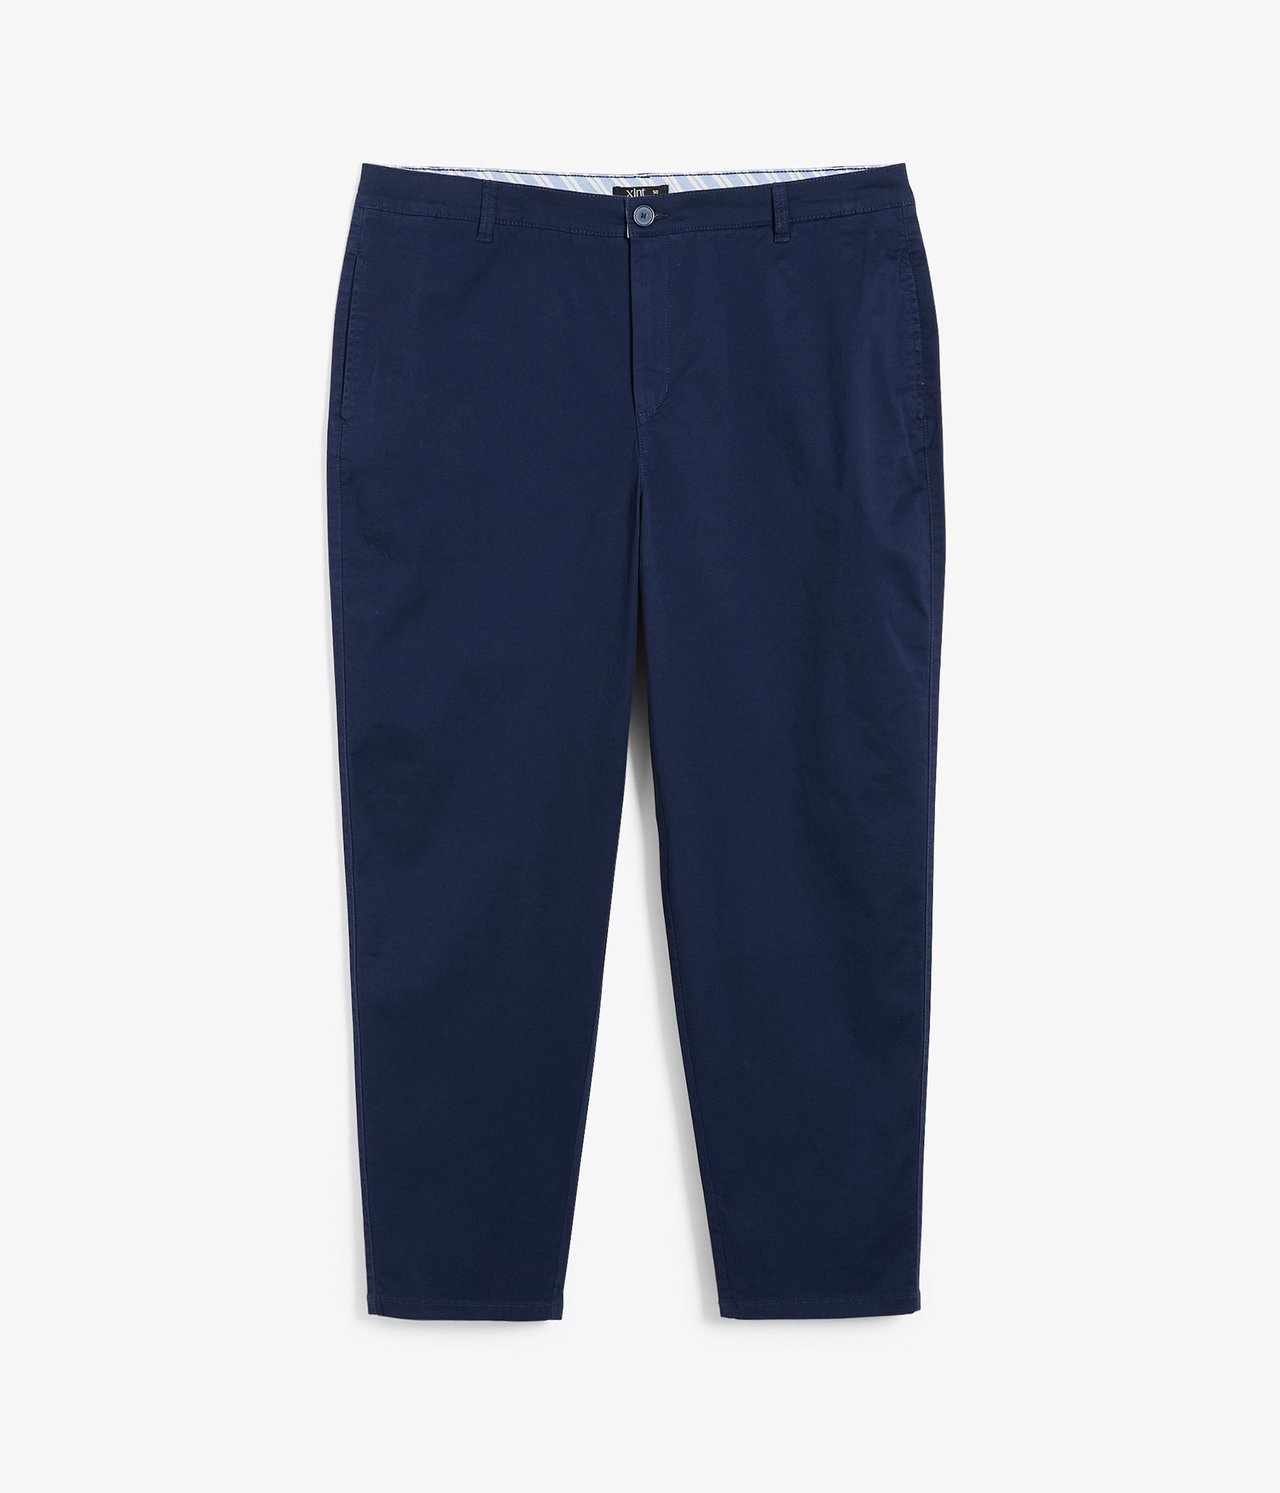 Spodnie typu chinos - Niebieski - 6